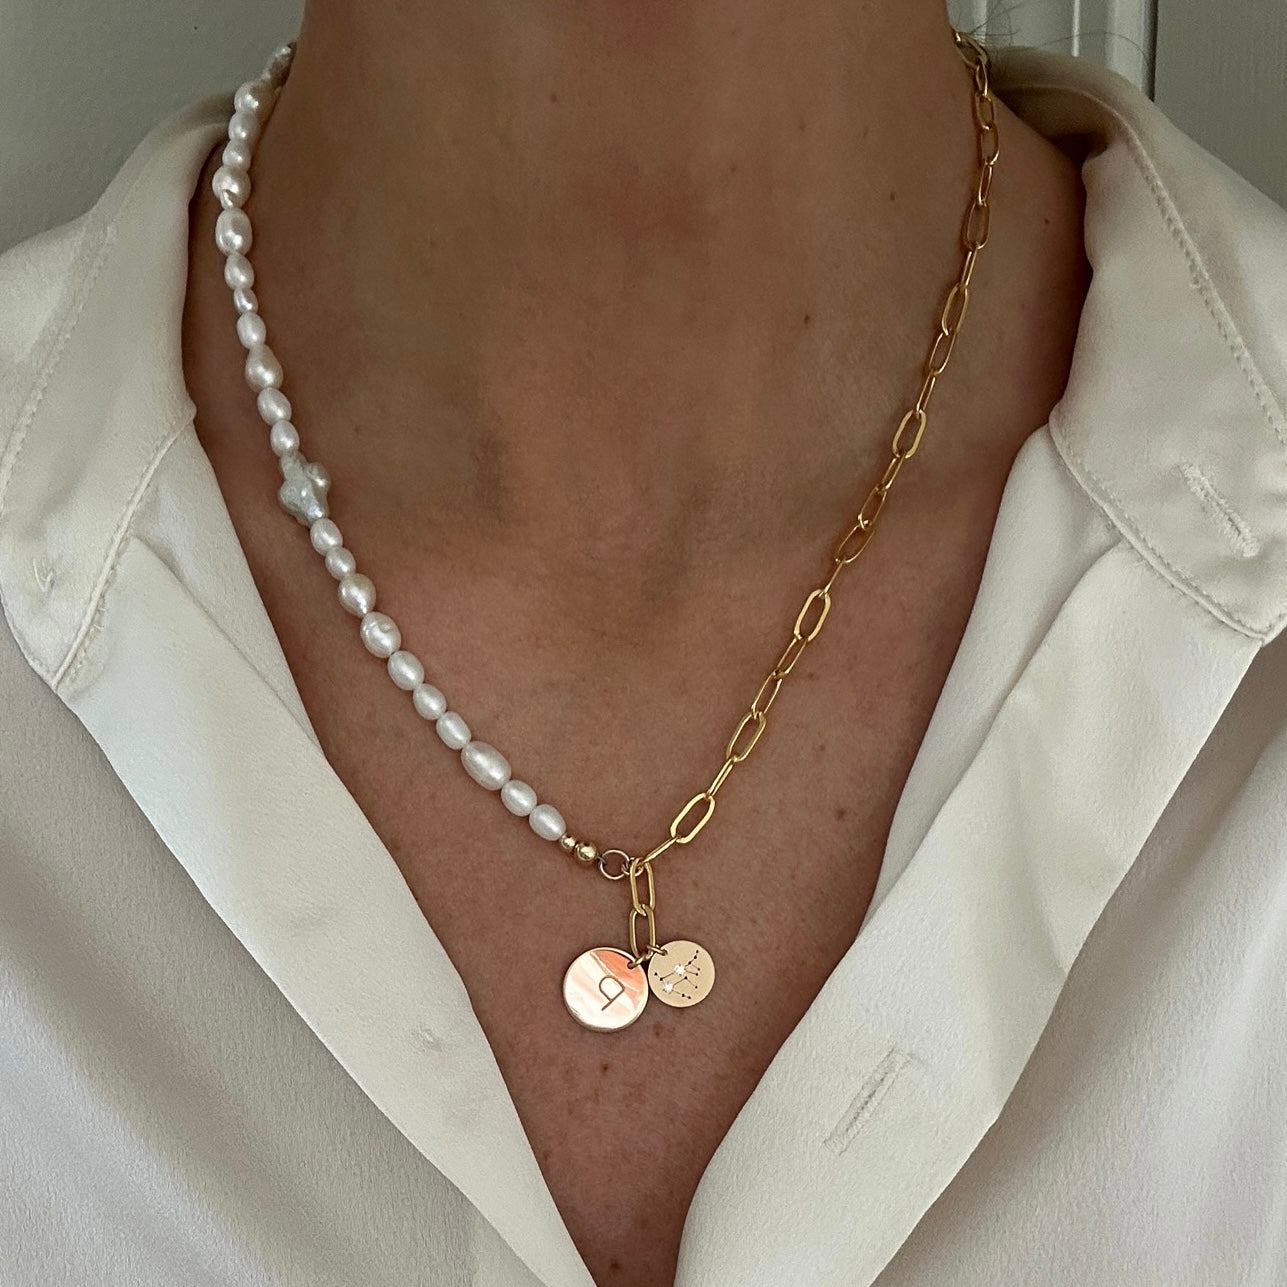 statement charm necklace 2.0